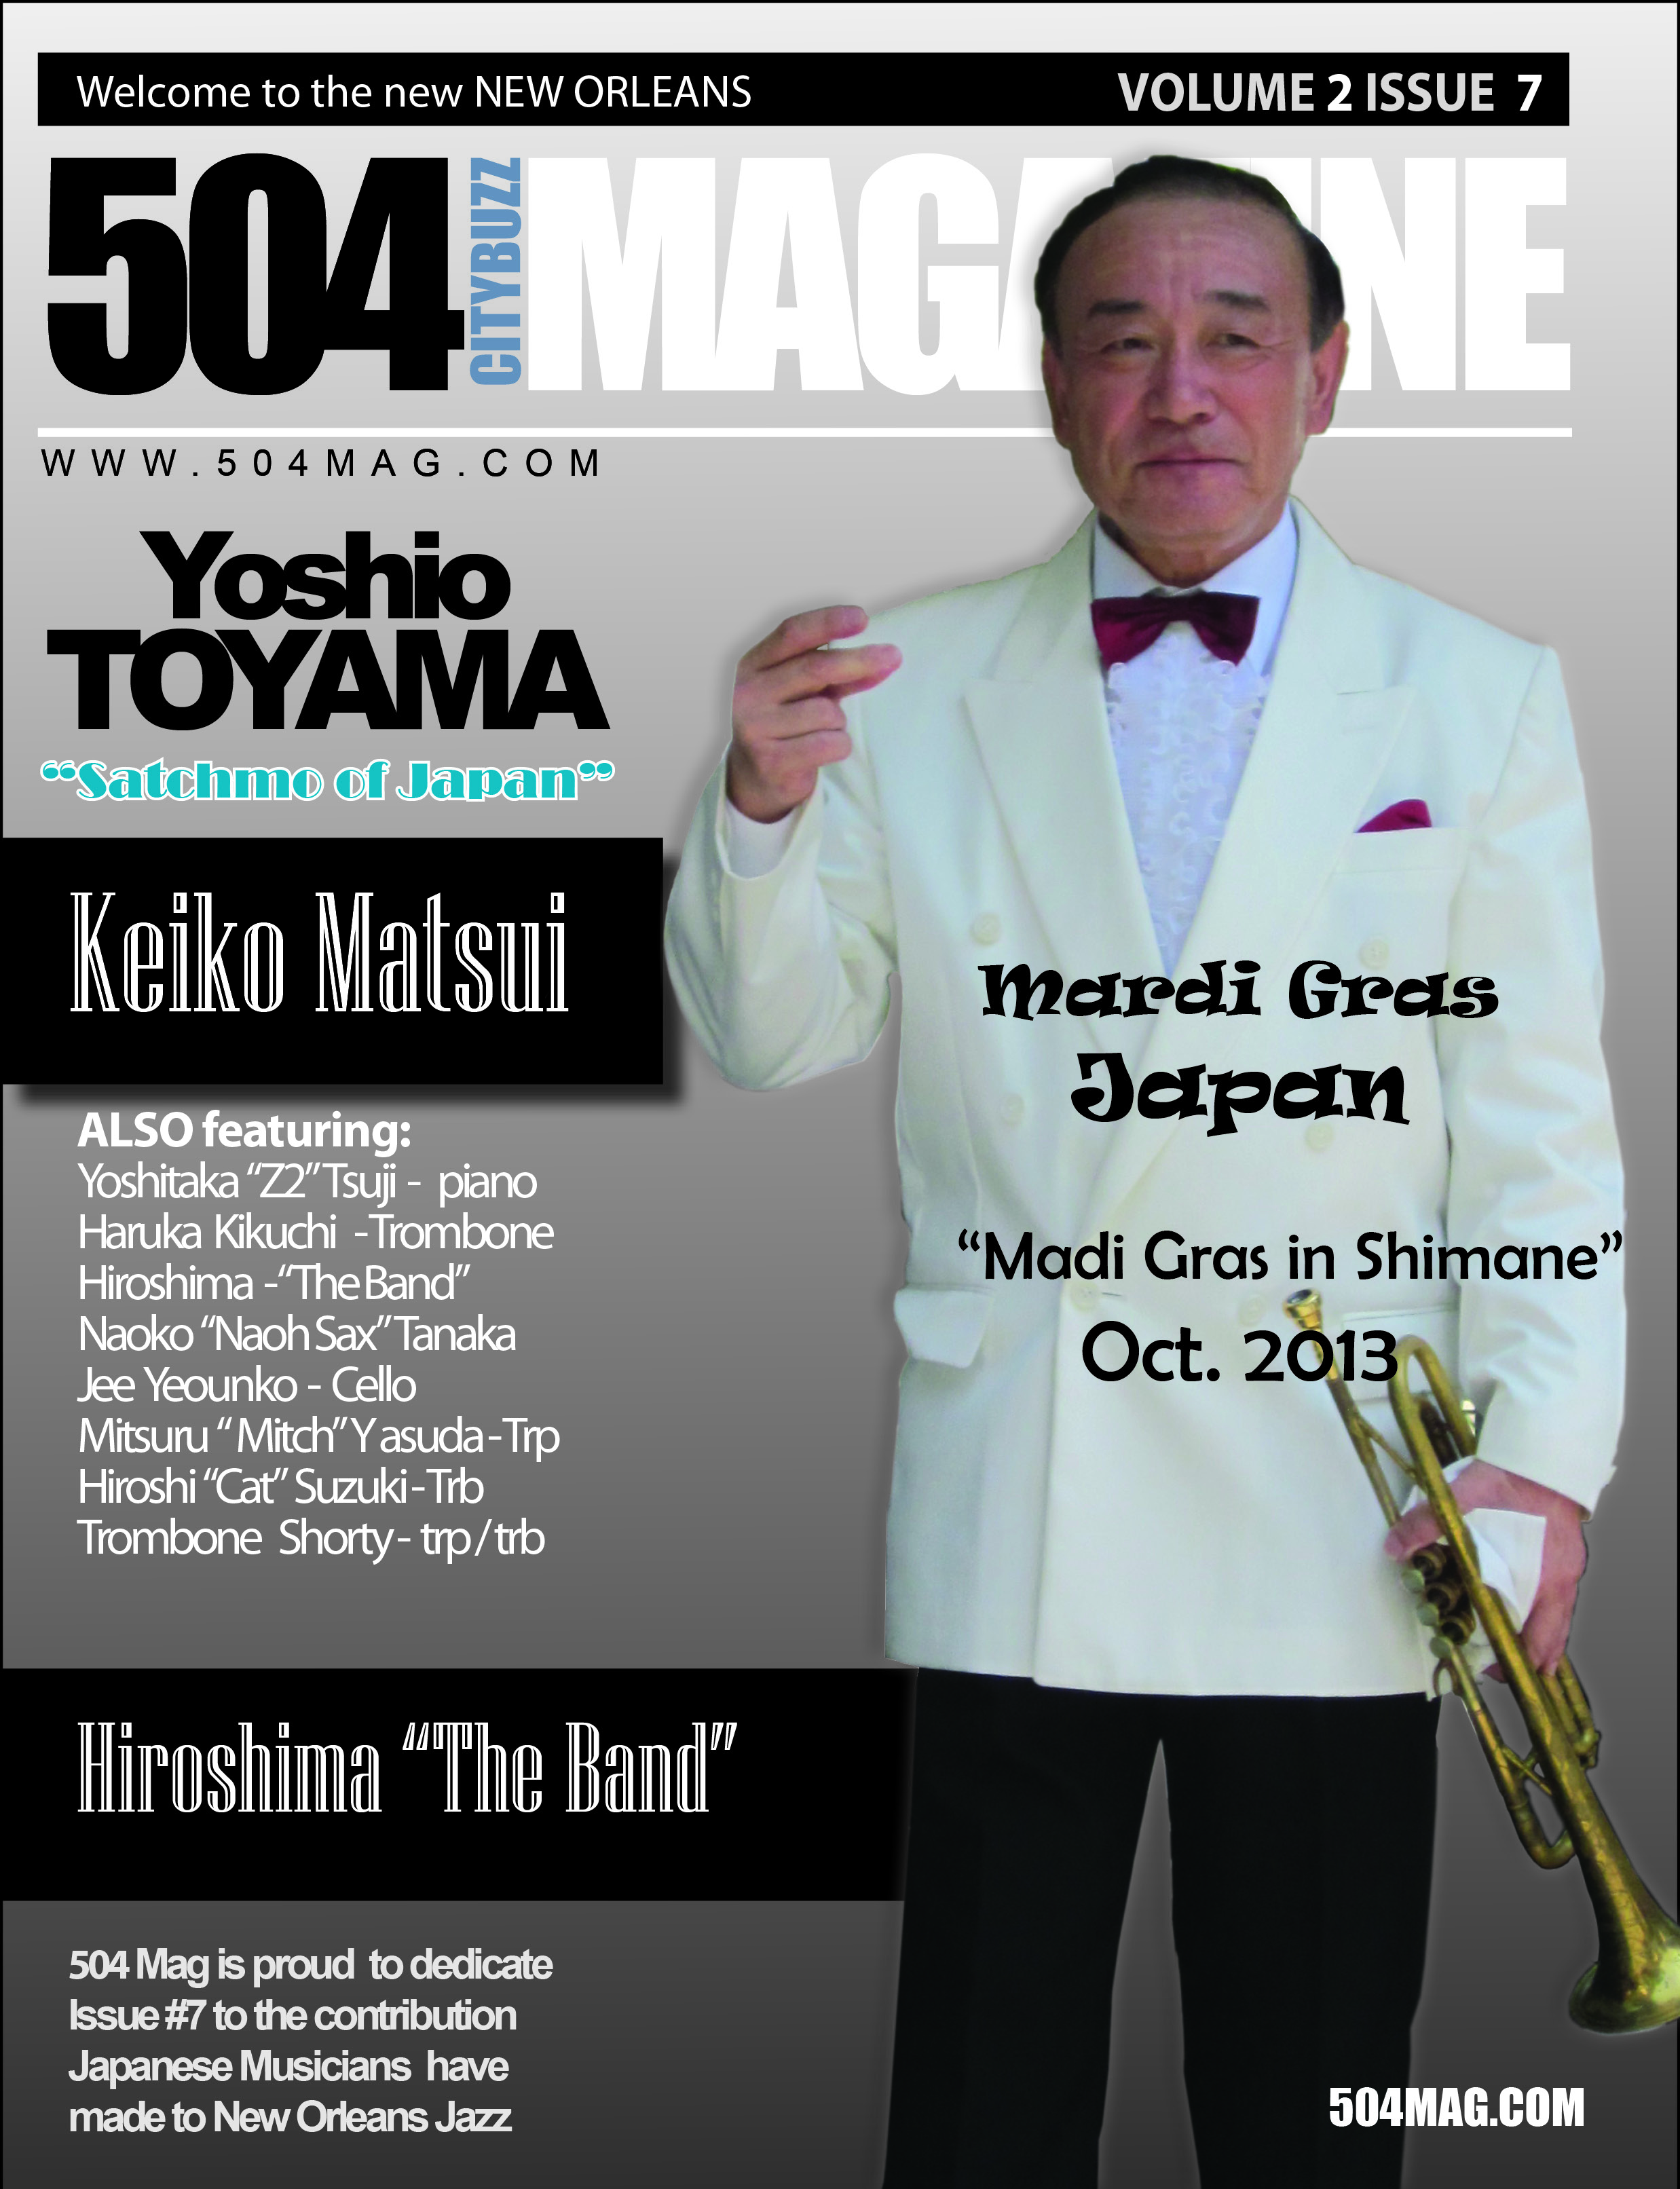 Issue #7 Japanese edtion